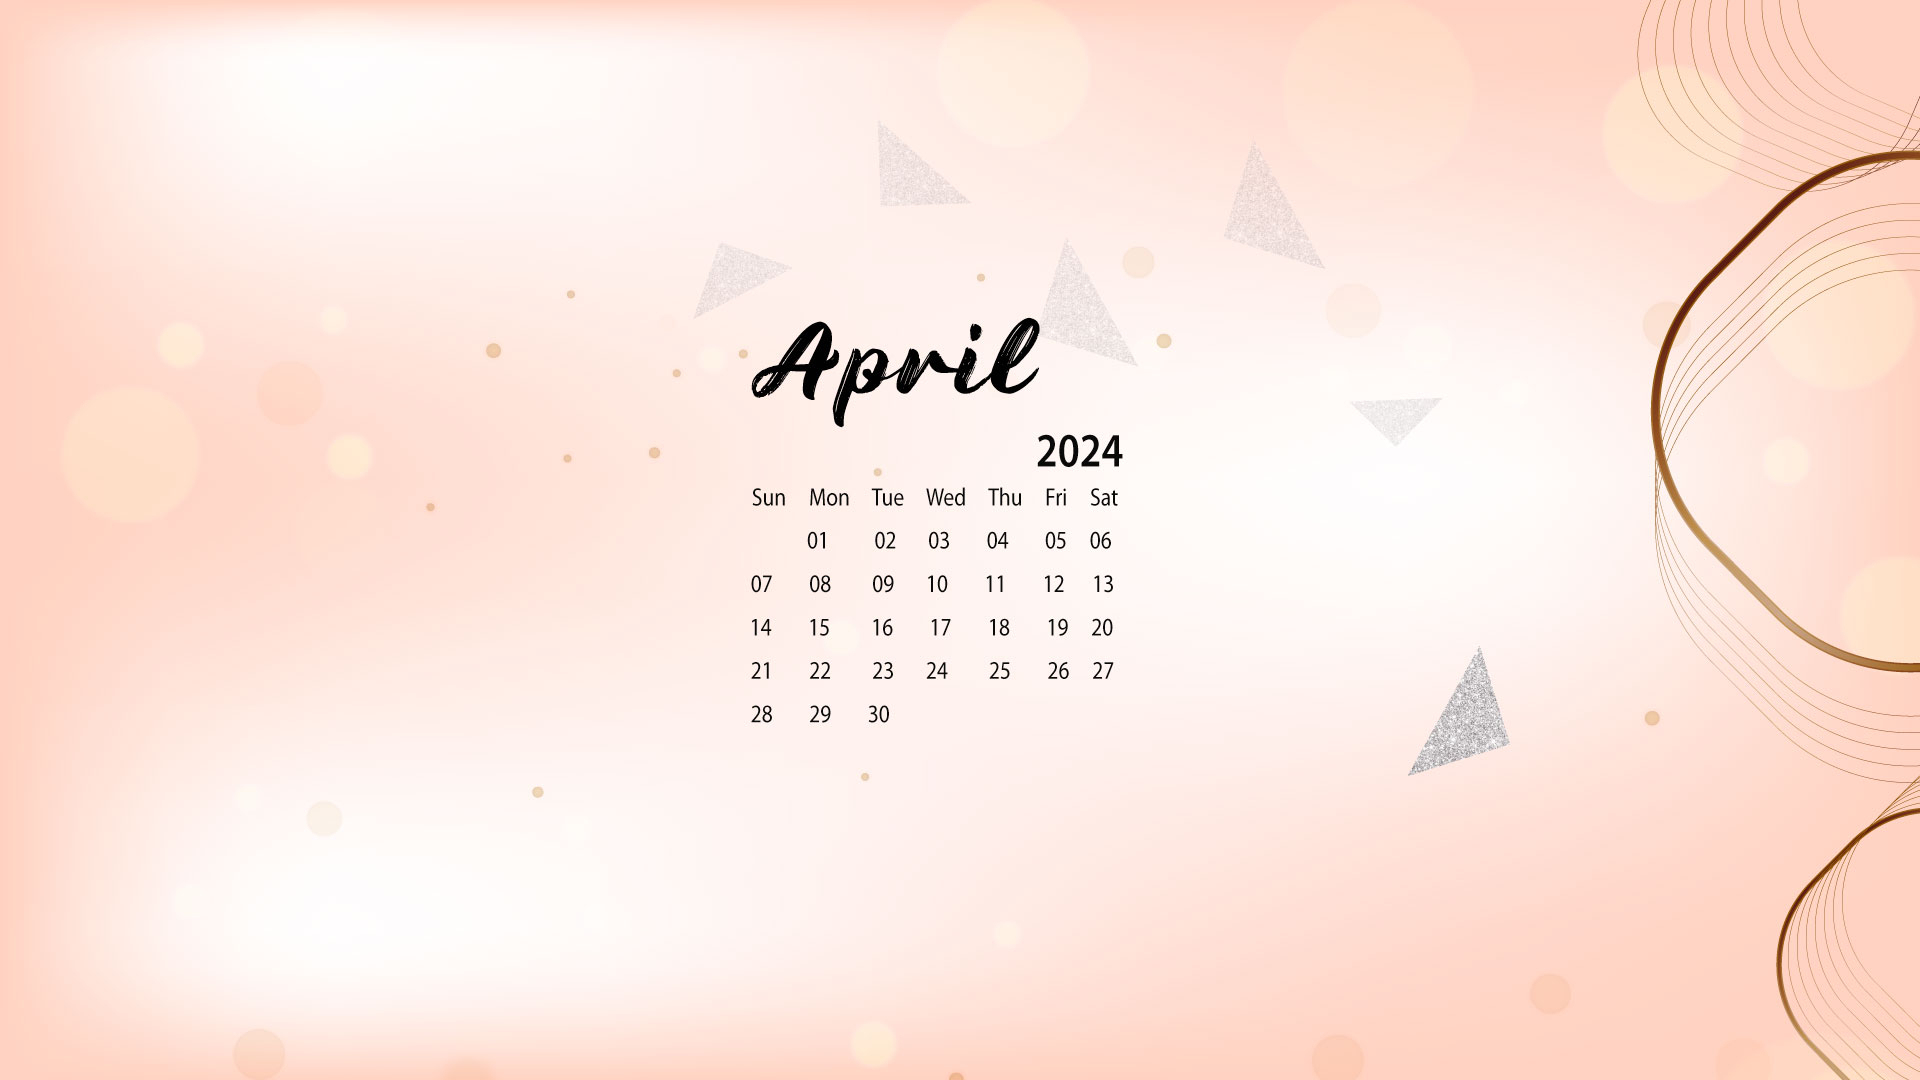 April 2024 Desktop Wallpaper Calendar - Calendarlabs with regard to April 2024 Calendar Wallpaper